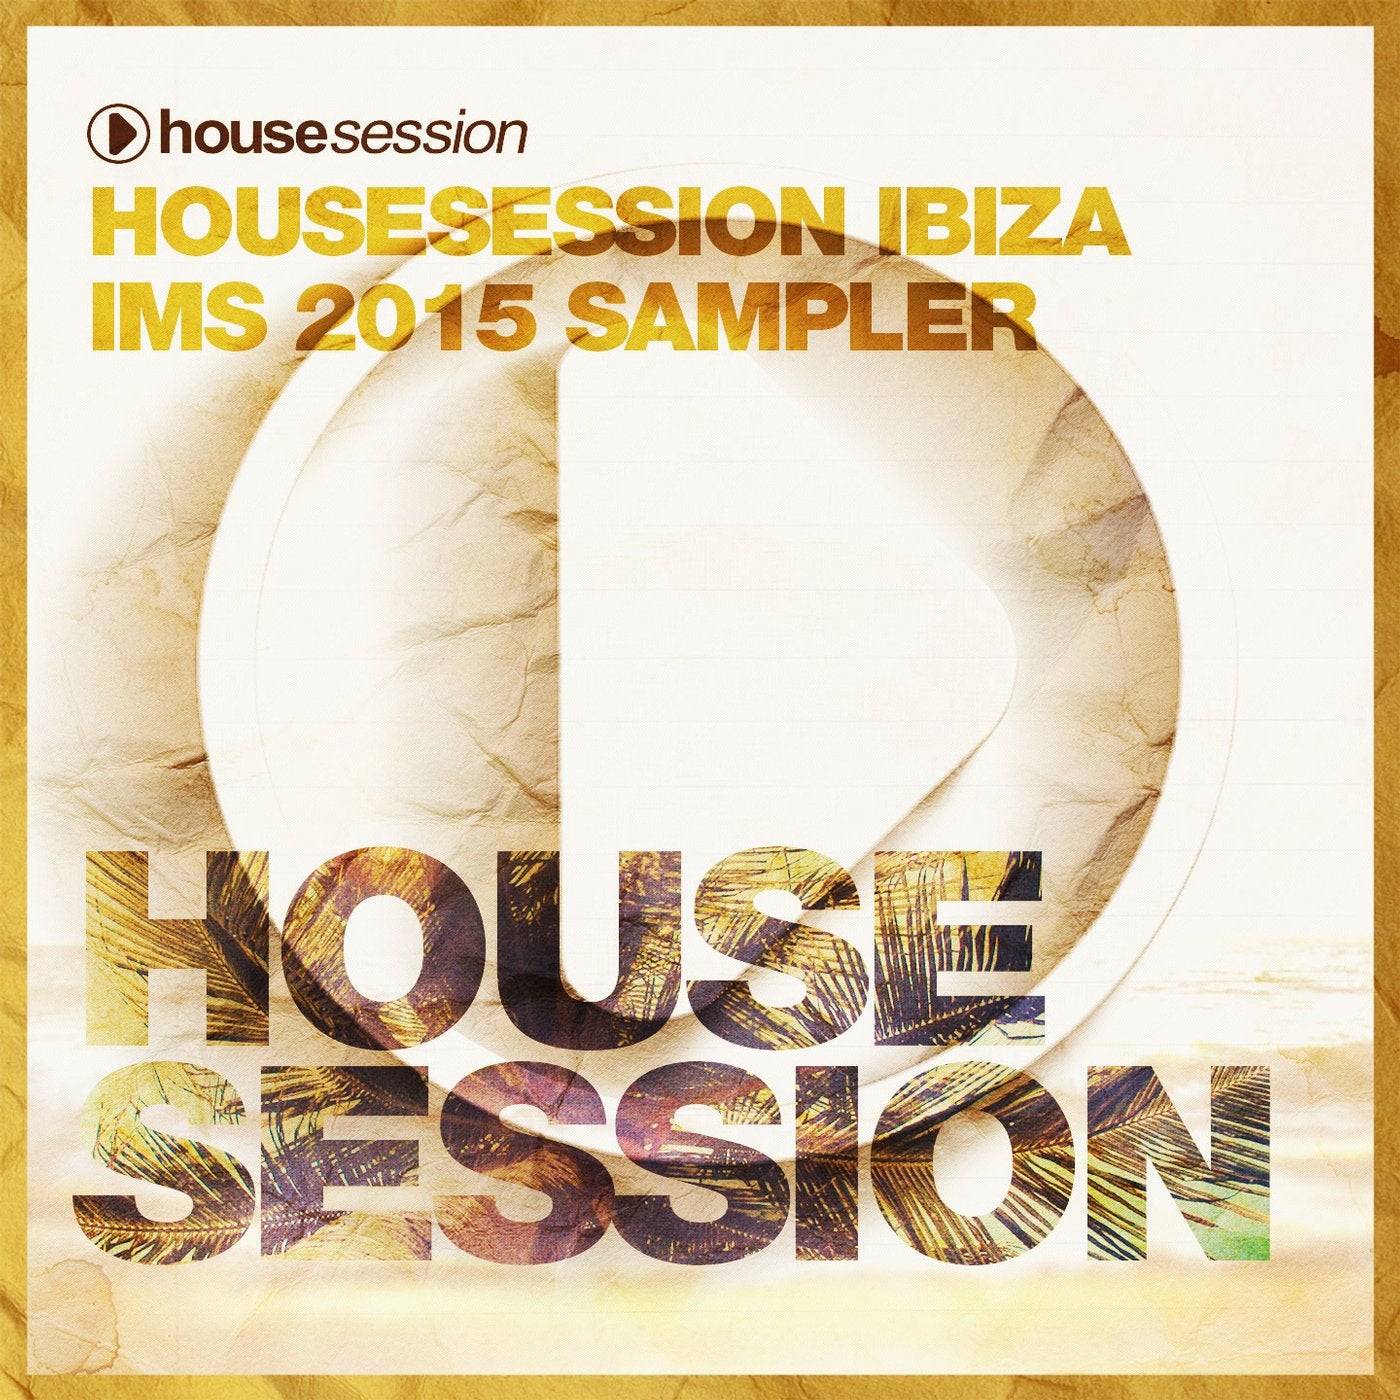 Housesession Ibiza IMS 2015 Sampler